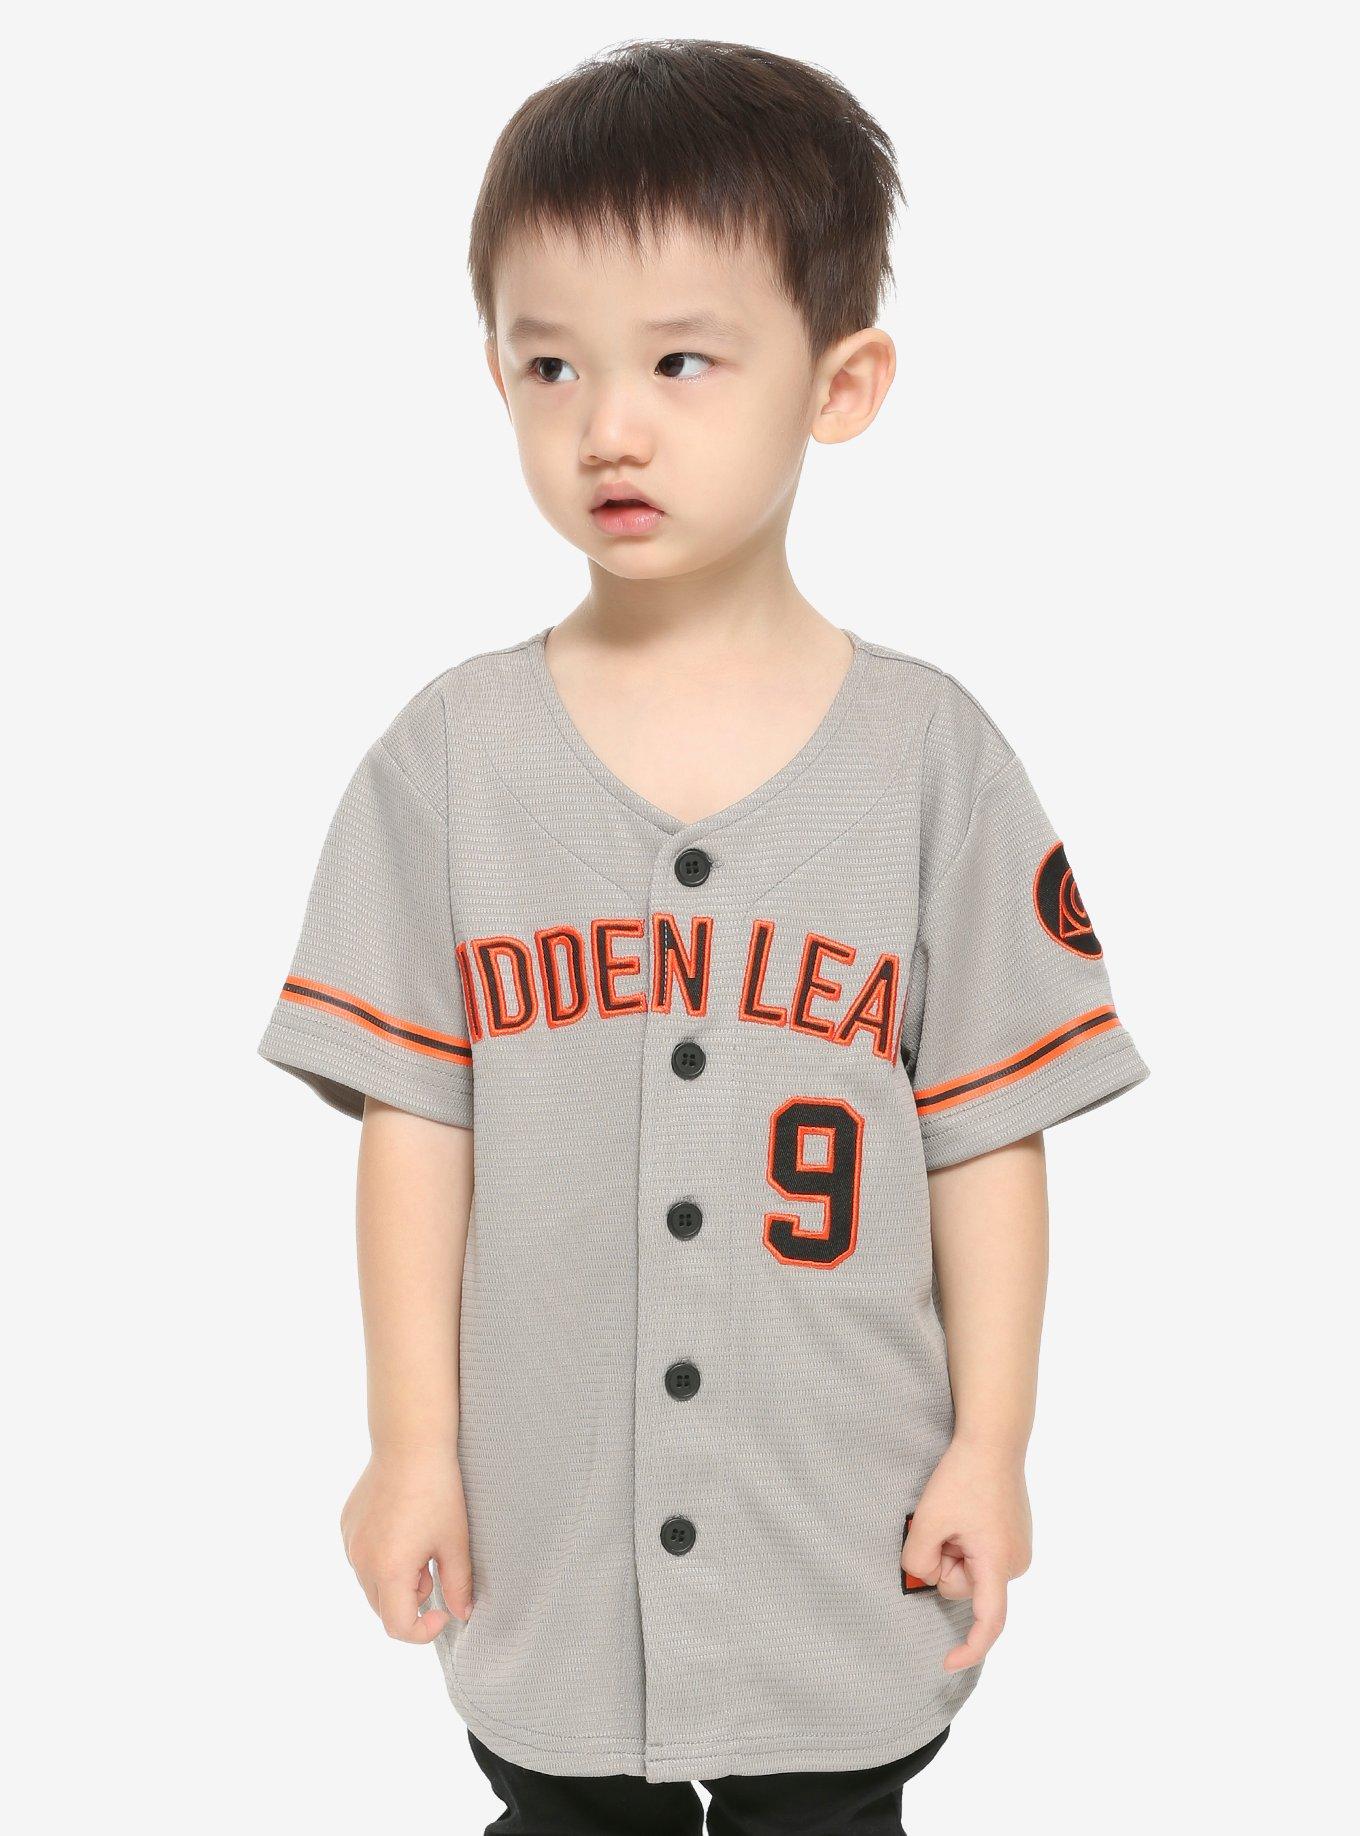 Naruto Shippuden Hidden Leaf Toddler Baseball Jersey - BoxLunch Exclusive